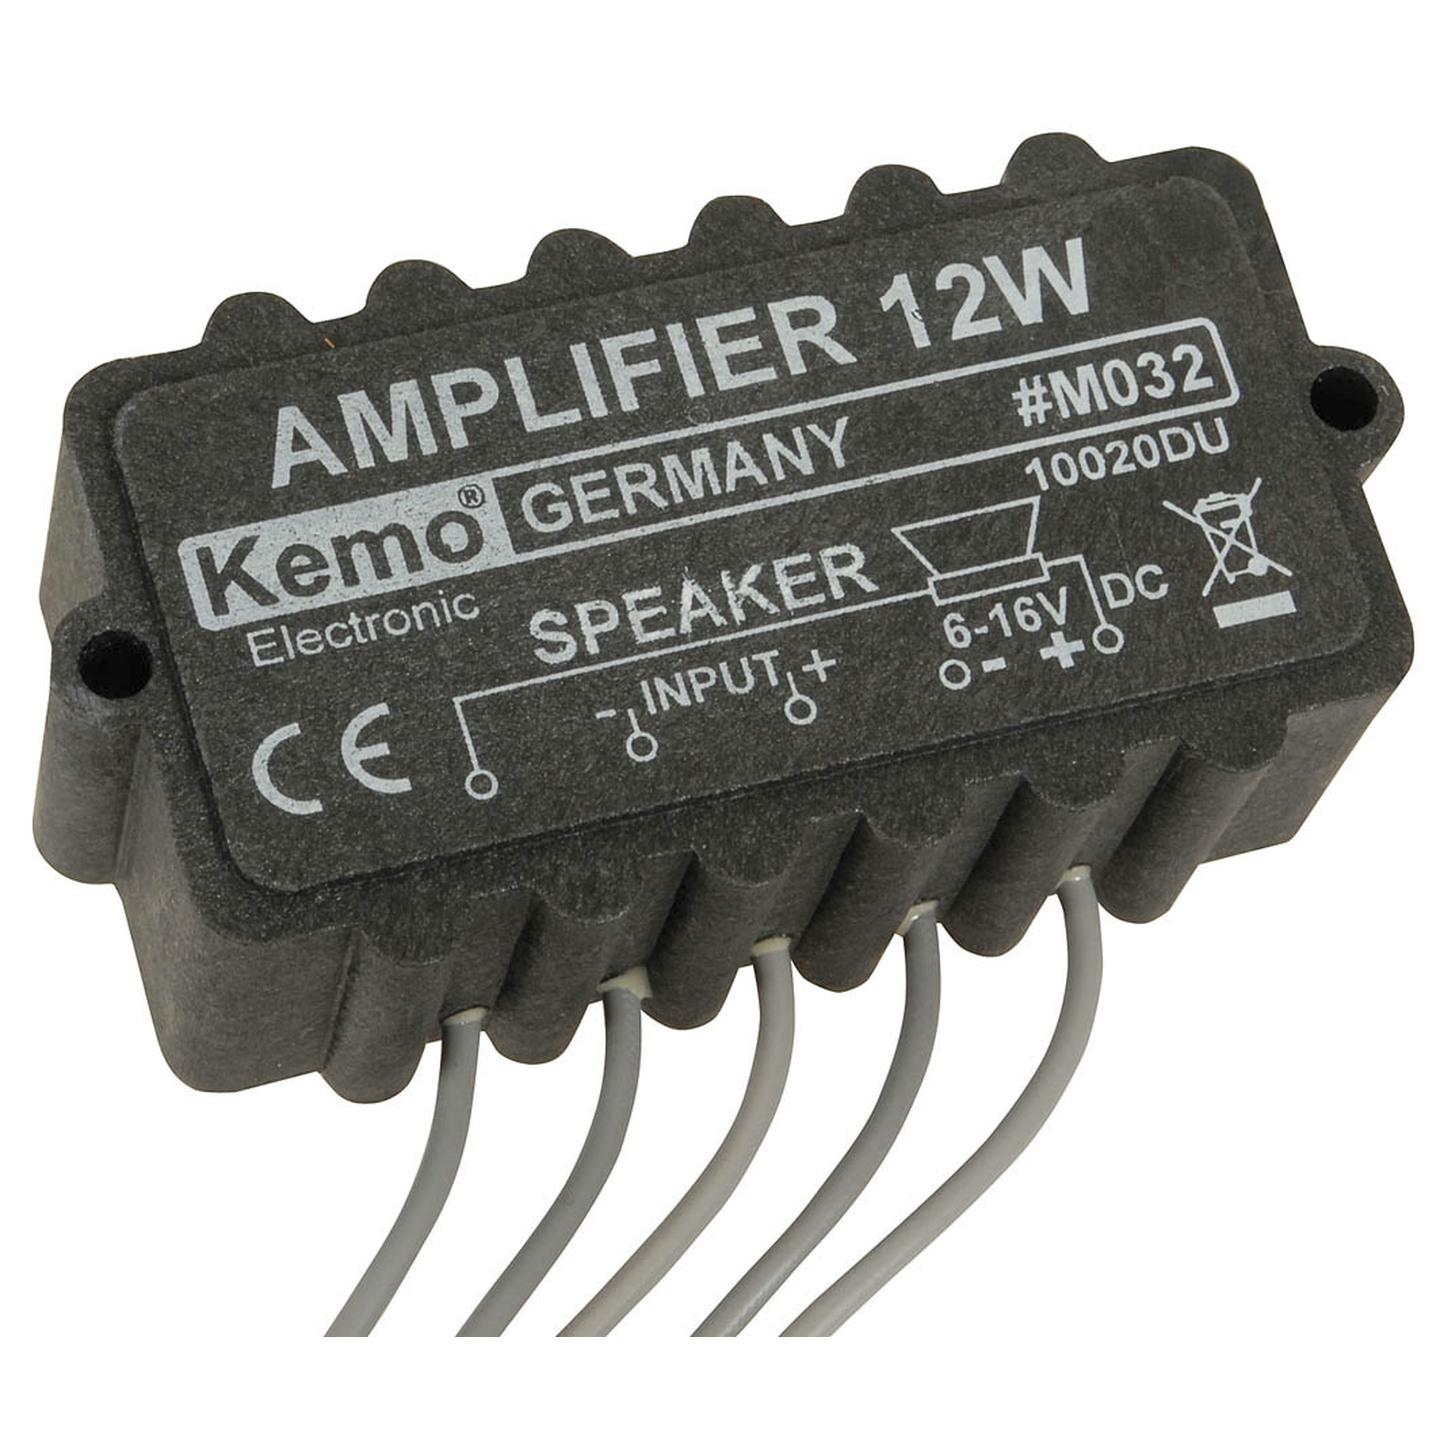 Universal Amp 12W Module M032 - 1 Channel